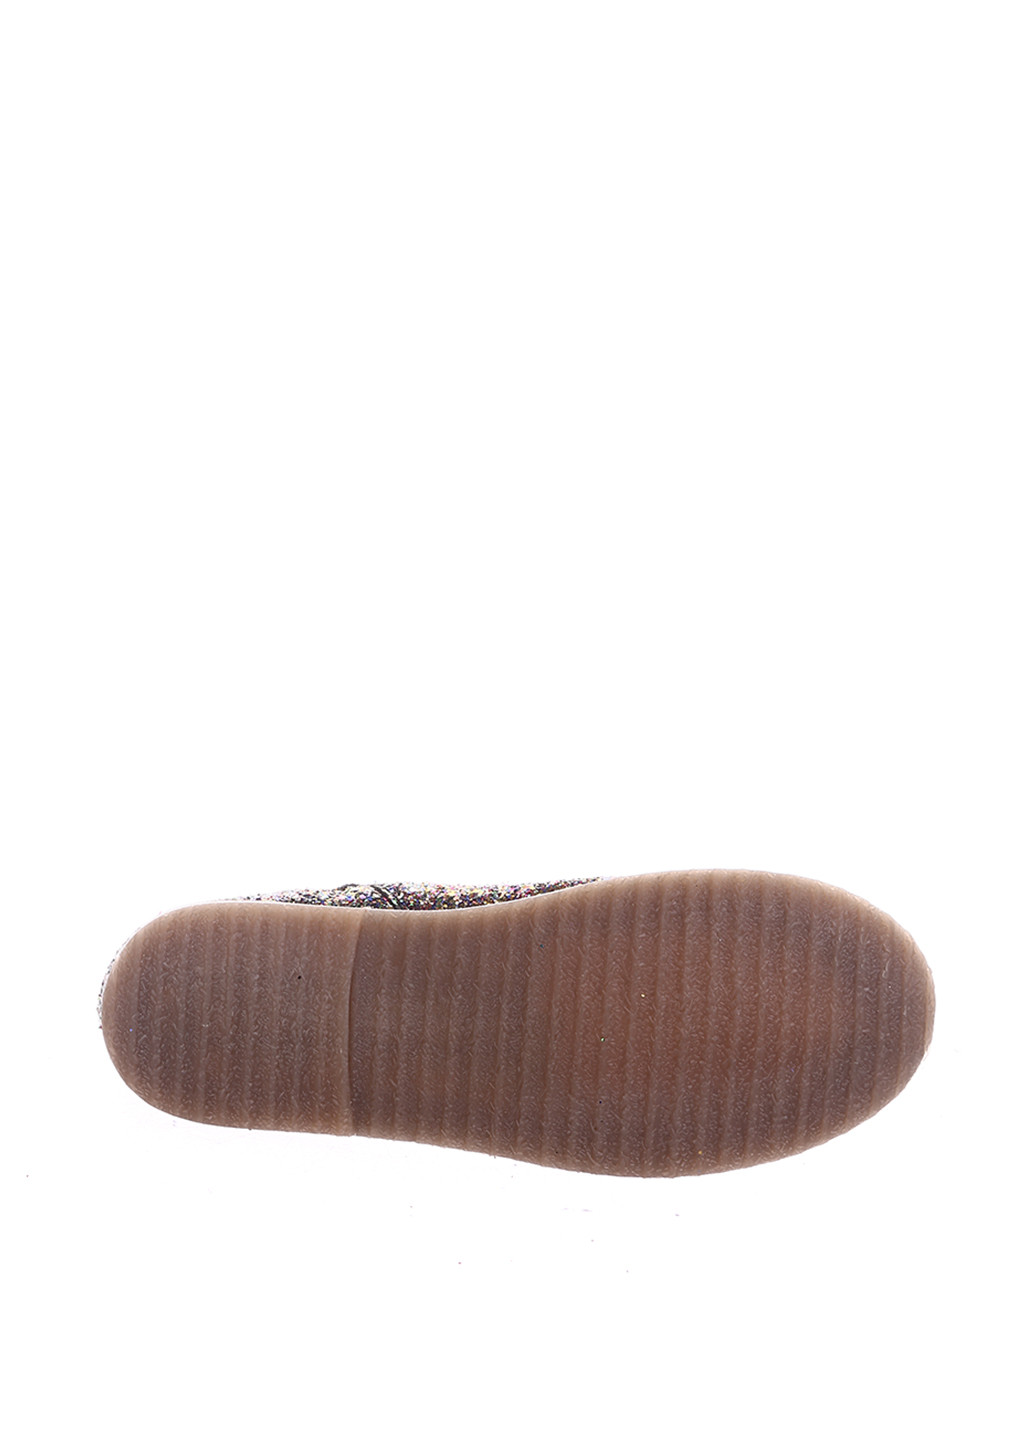 Осенние ботинки Mini Boden с глиттером тканевые